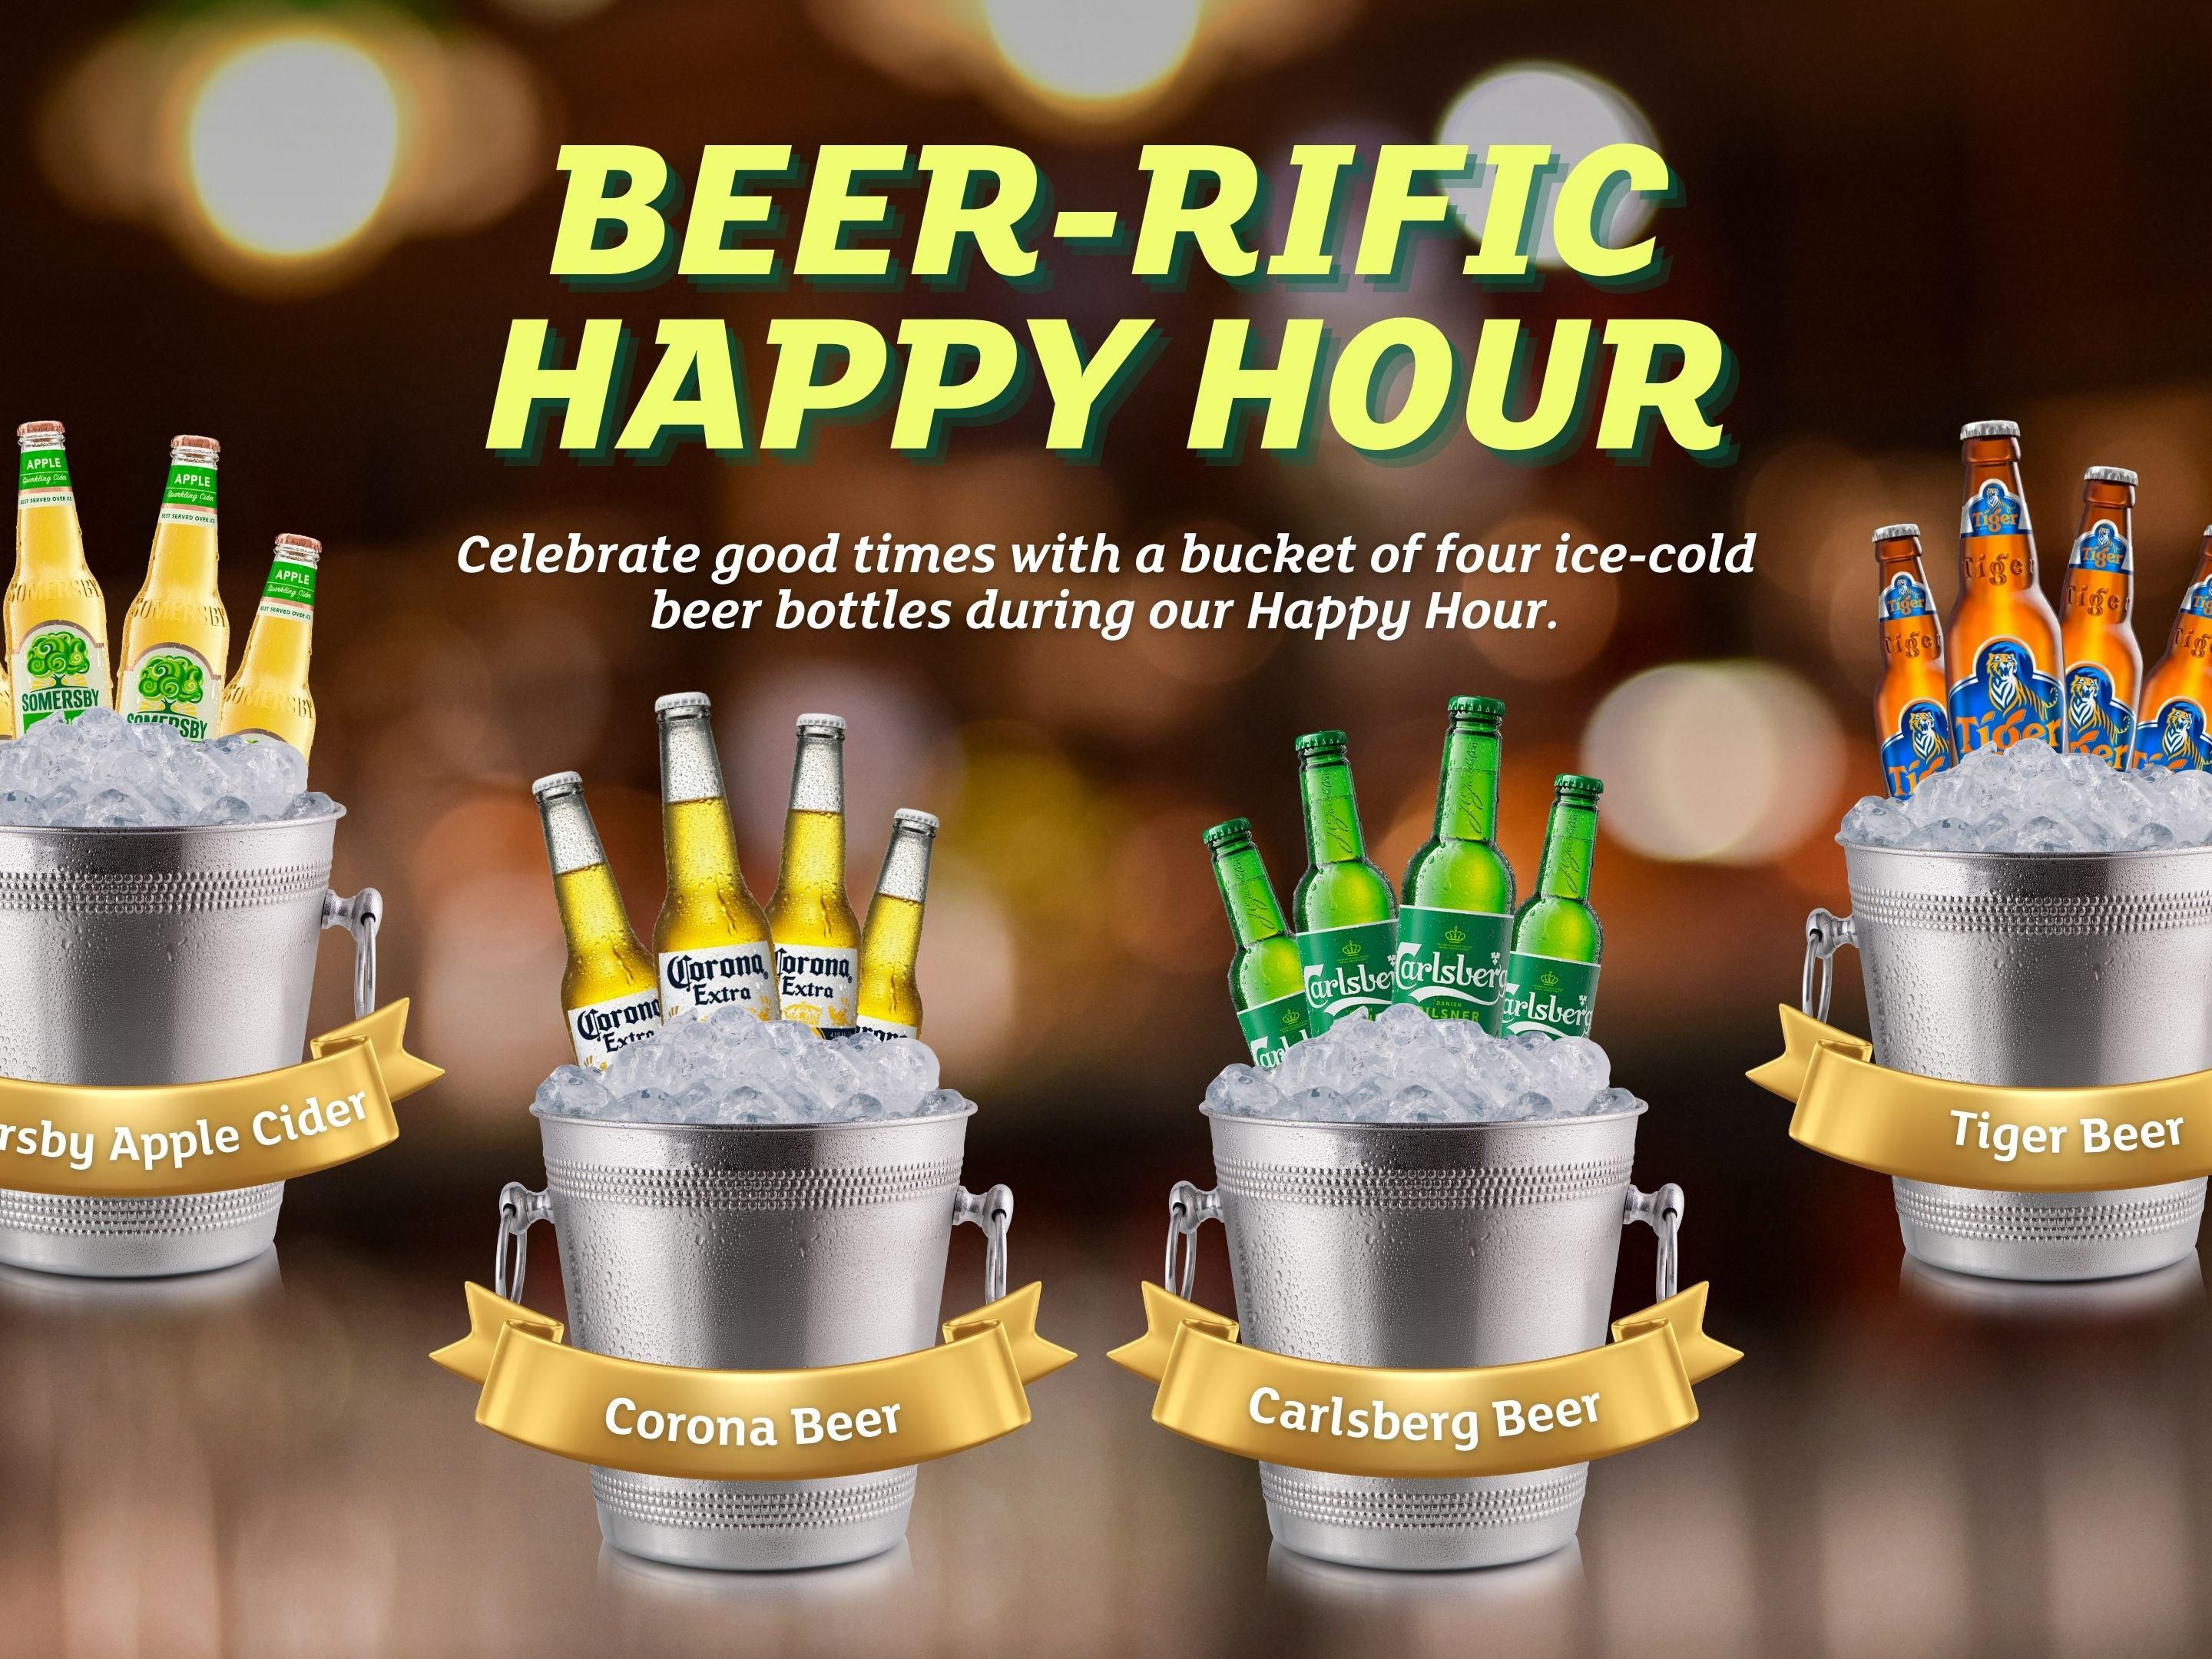 Beer-rific Happy Hour